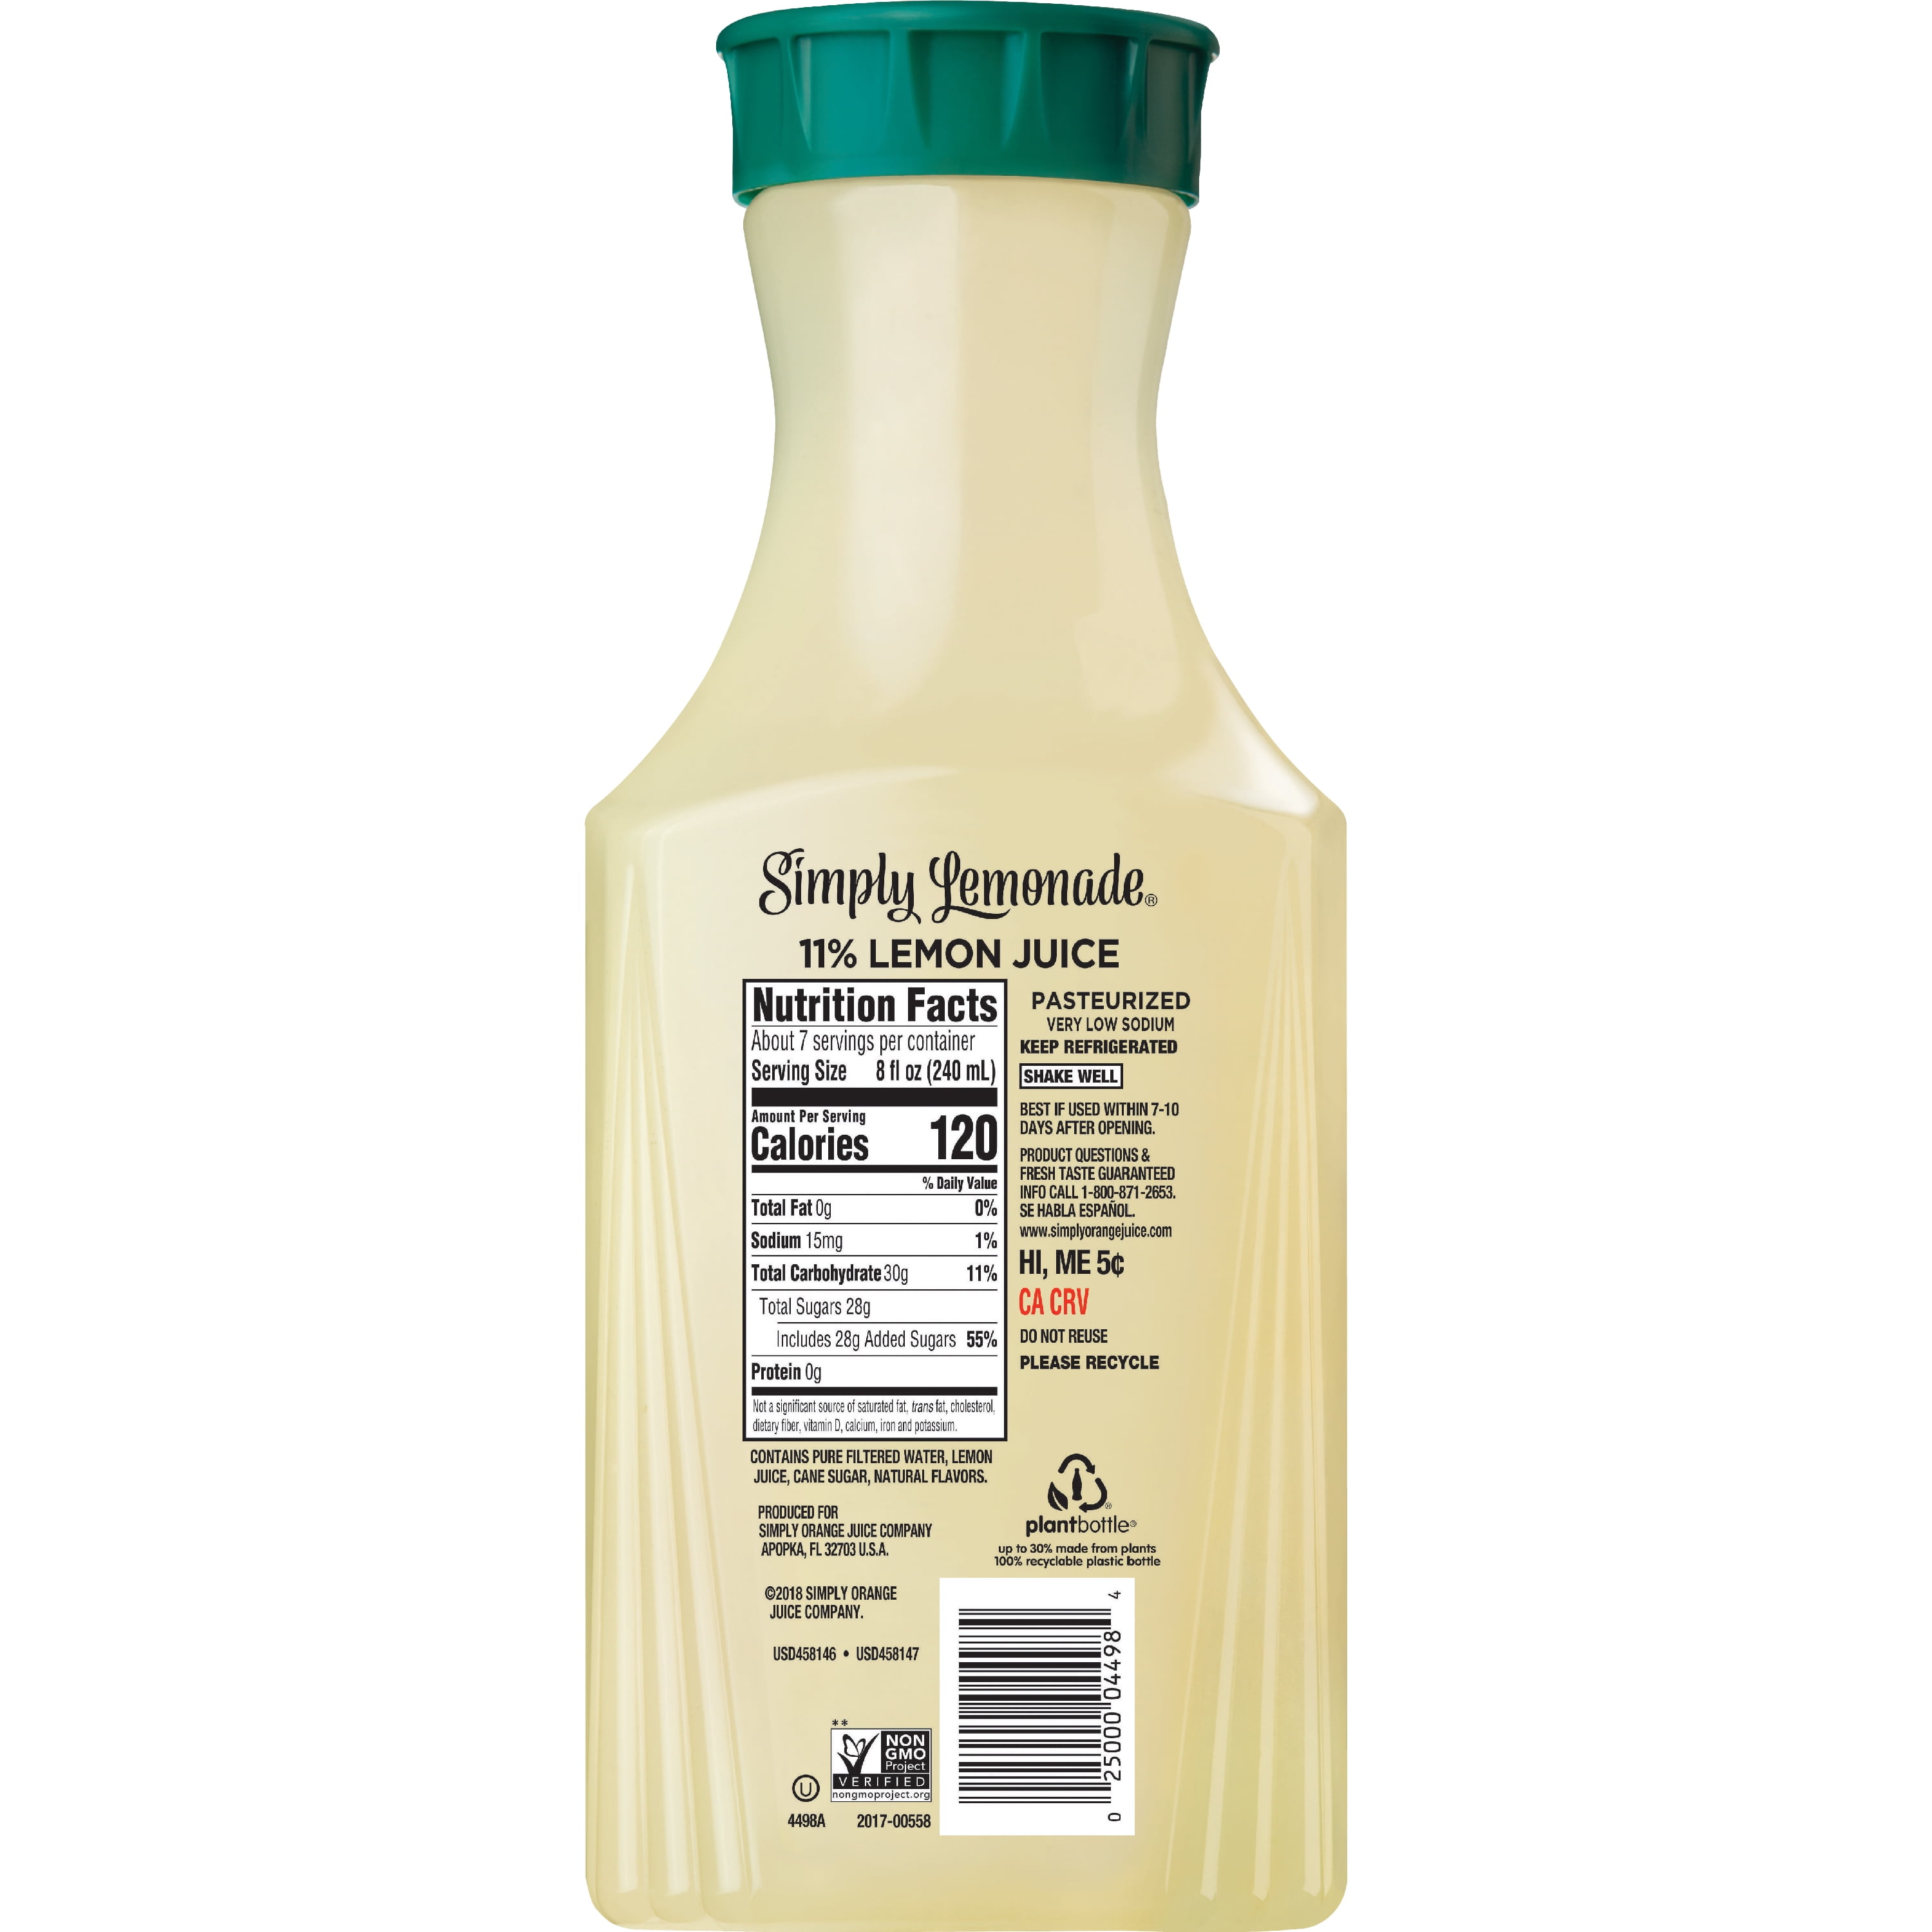 Simply com. Симпли лимонад. Tropicana Lemon Juice. Nutrition facts Juice. Juice Label Nutrition facts.